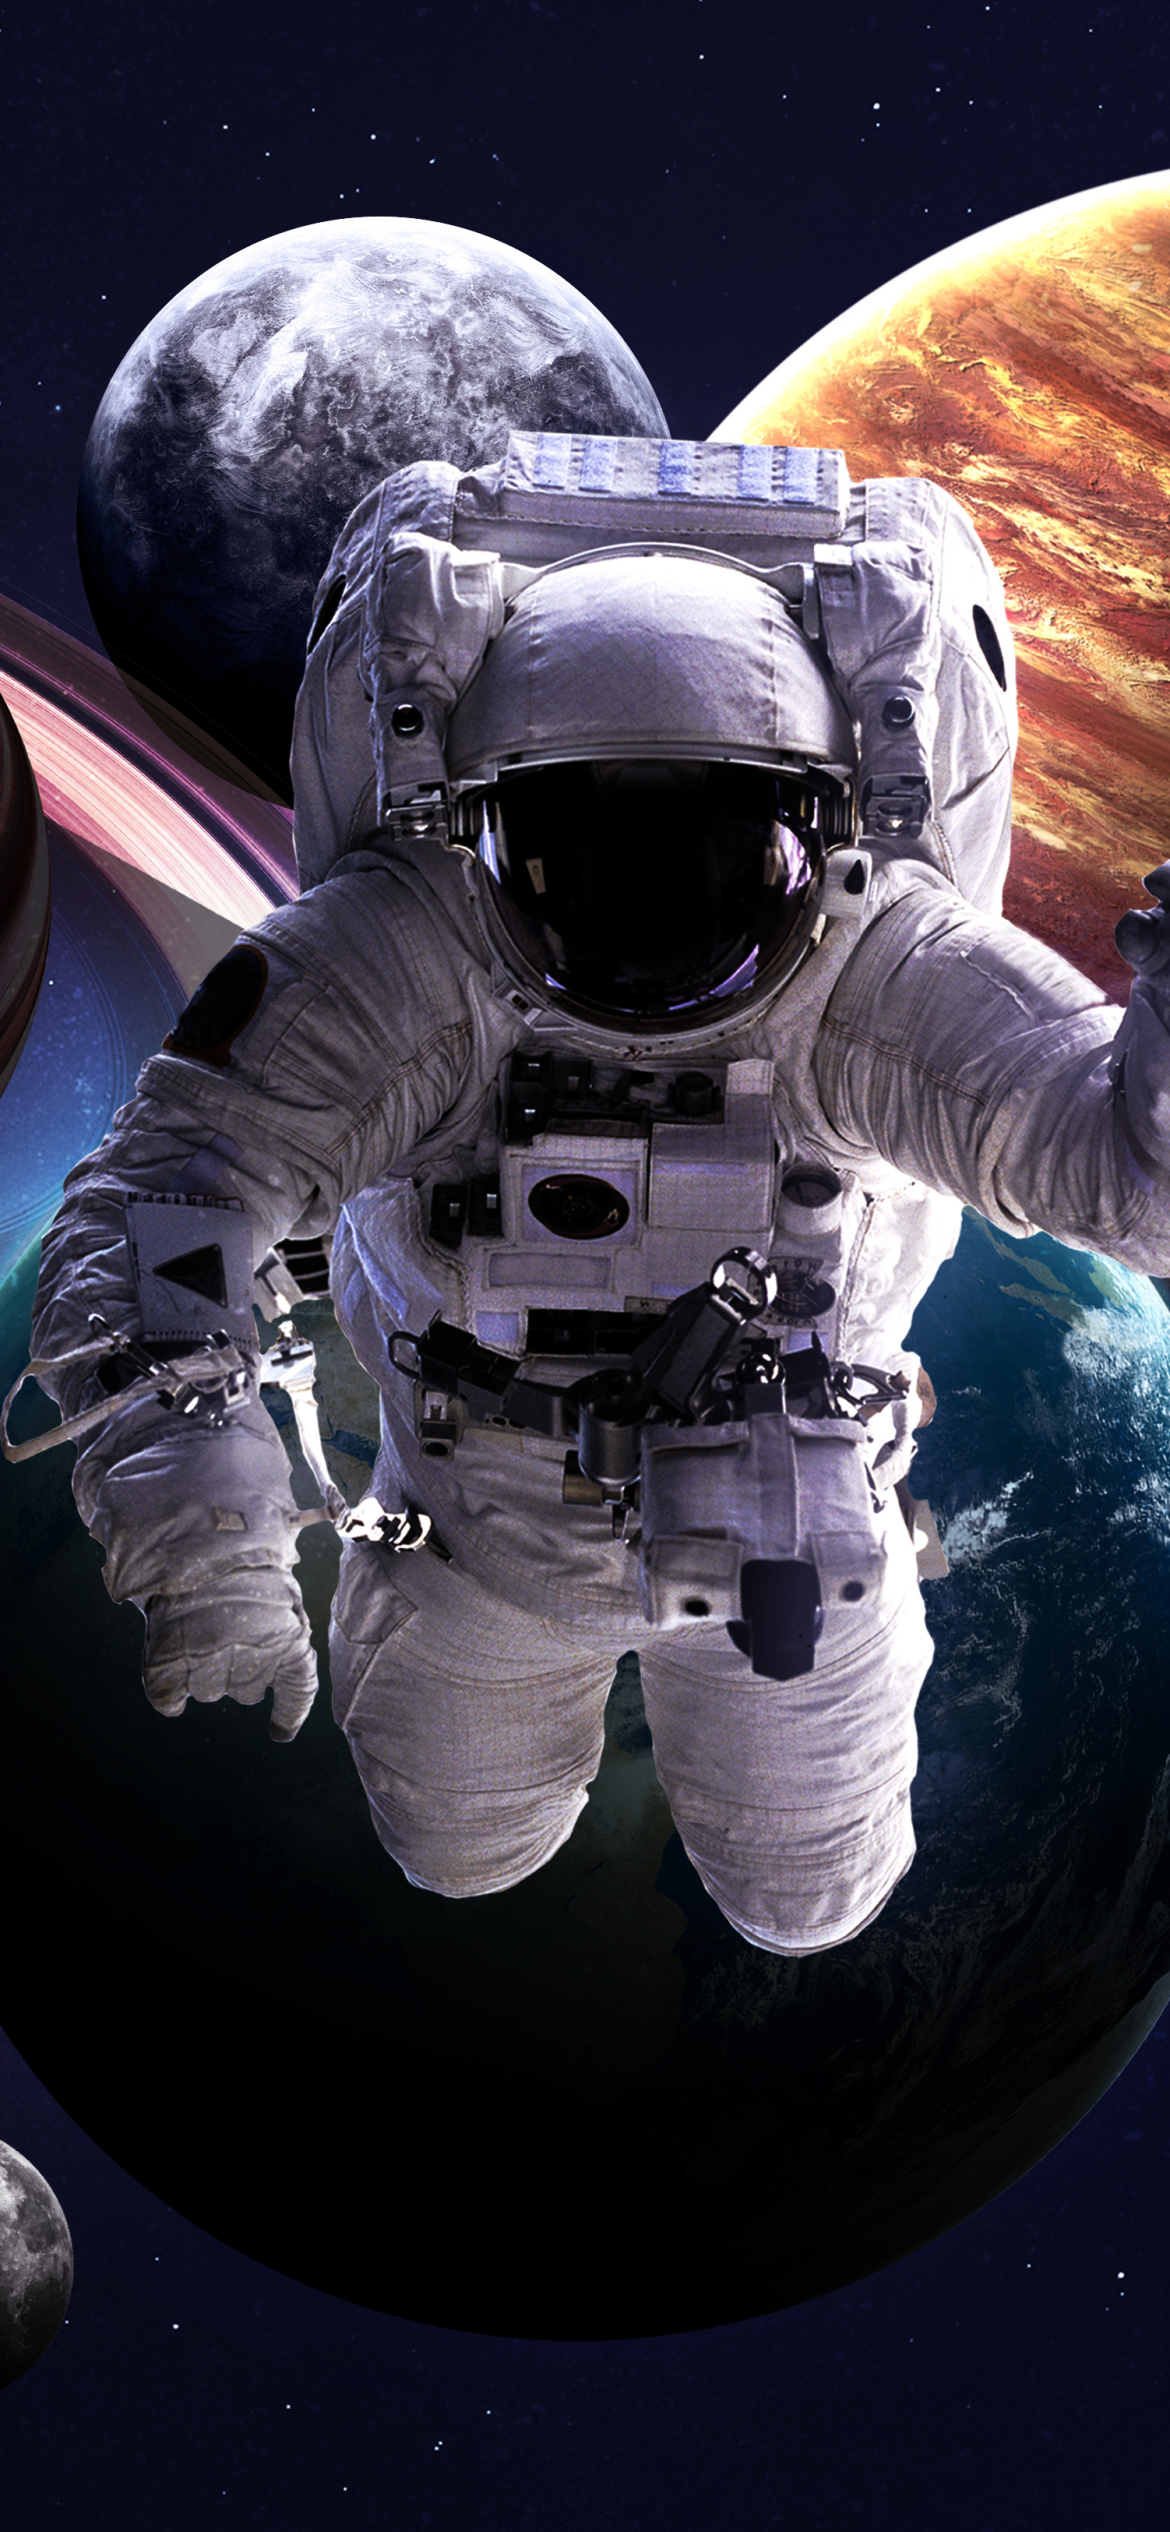 Descarga gratuita de fondo de pantalla para móvil de Planeta, Ciencia Ficción, Astronauta.